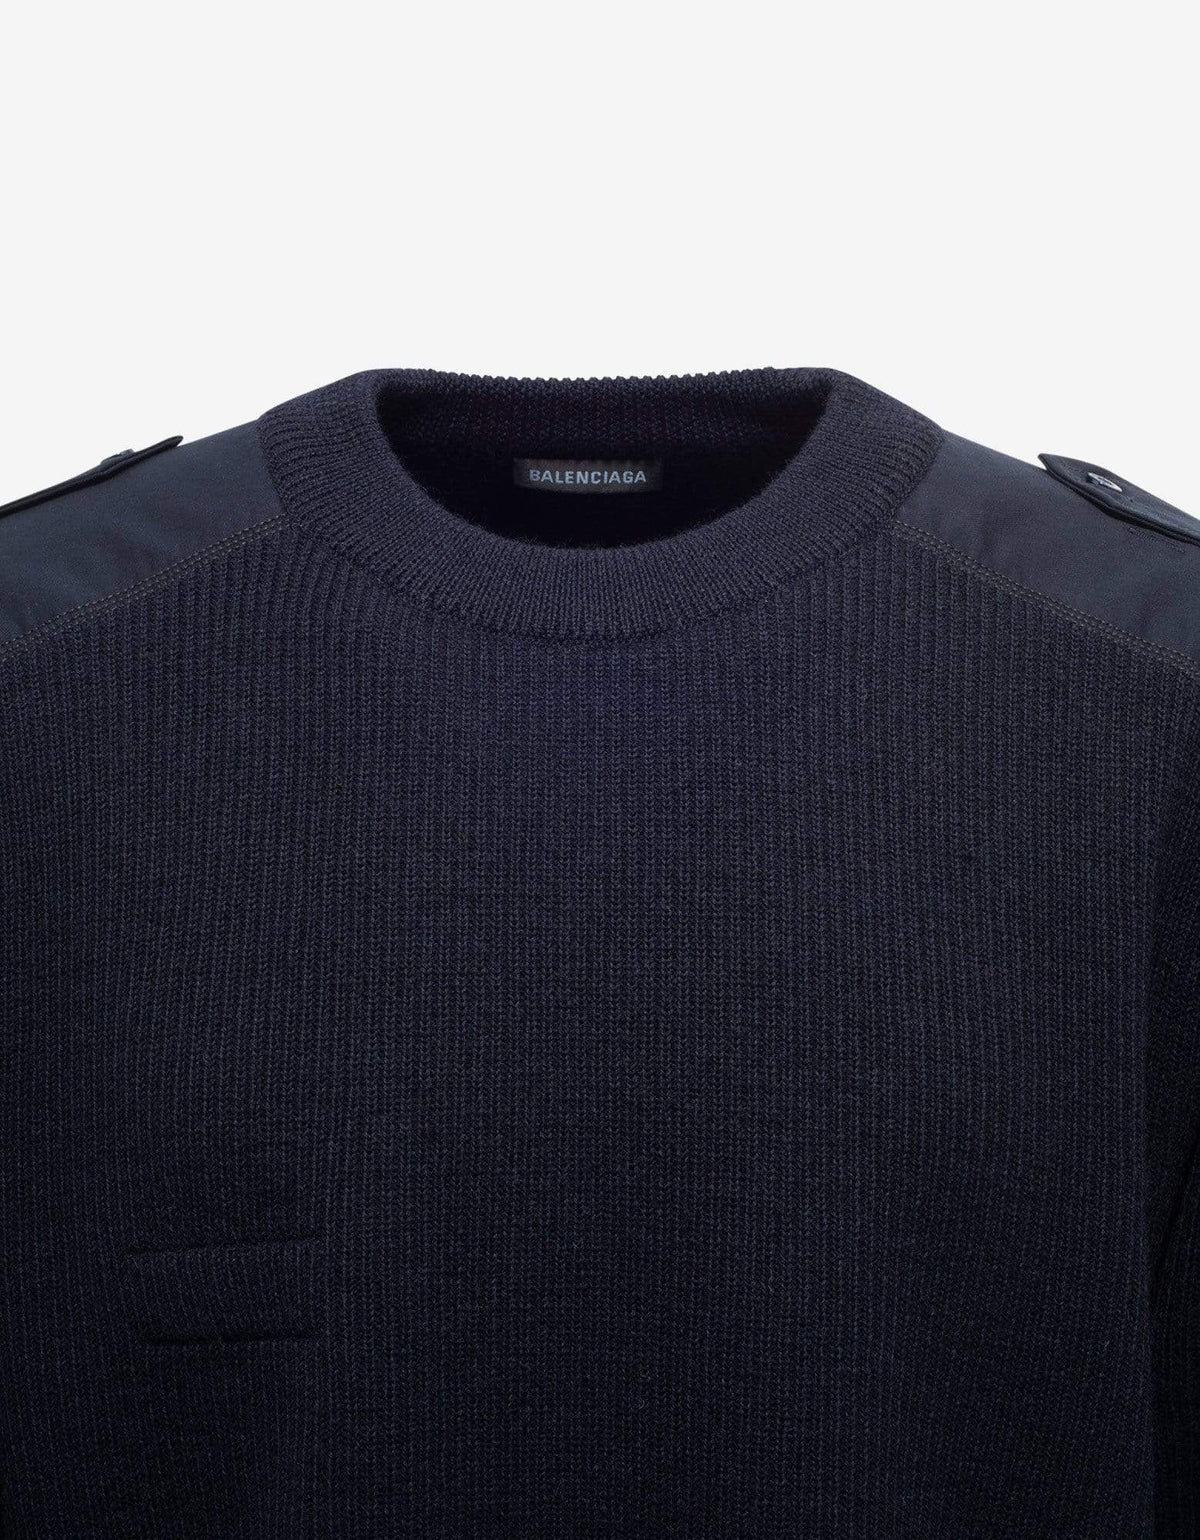 Balenciaga Navy Blue Logo Panelled Sweater